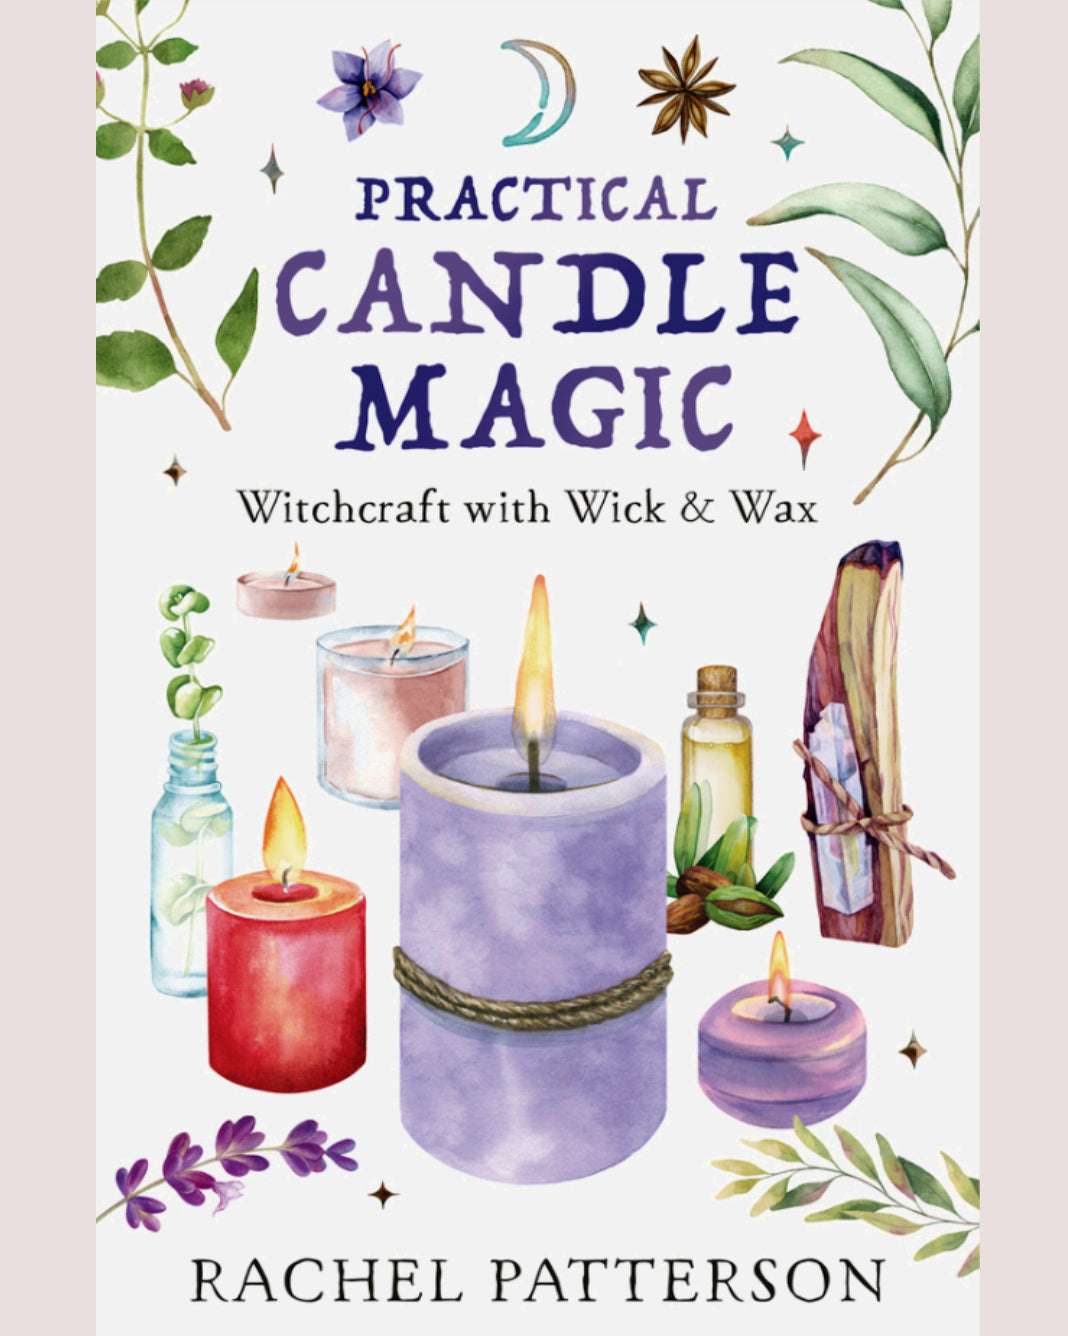 Practical Candle Magic